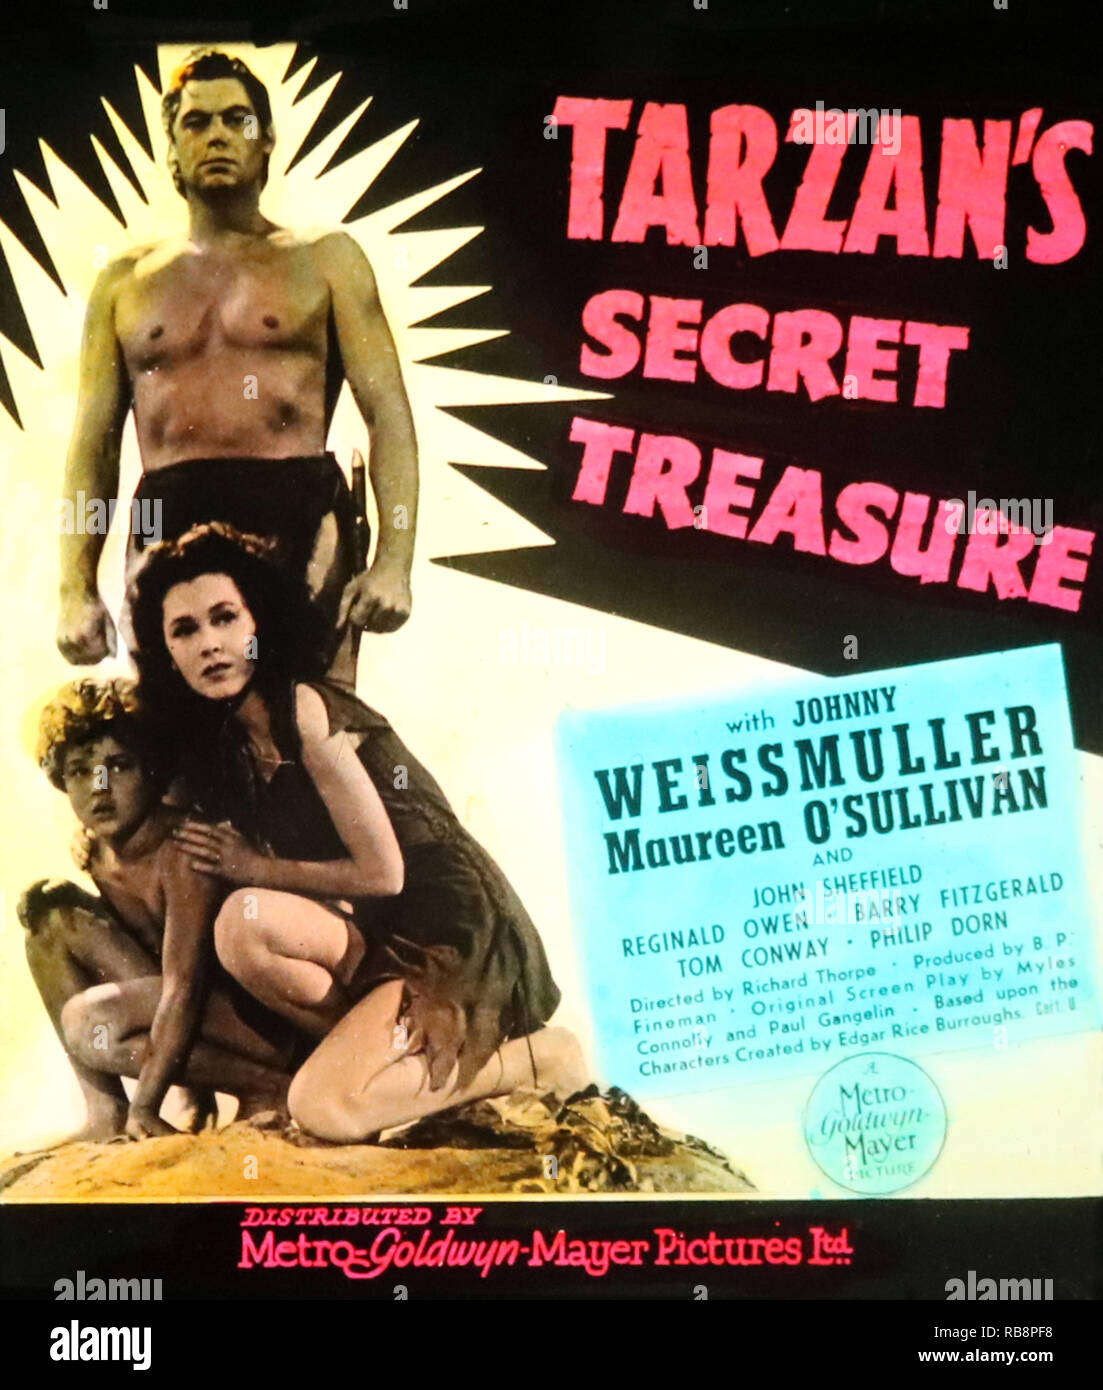 Johnny Weissmuller 'Tarzan's Secret Treasure' movie advertisement Stock Photo